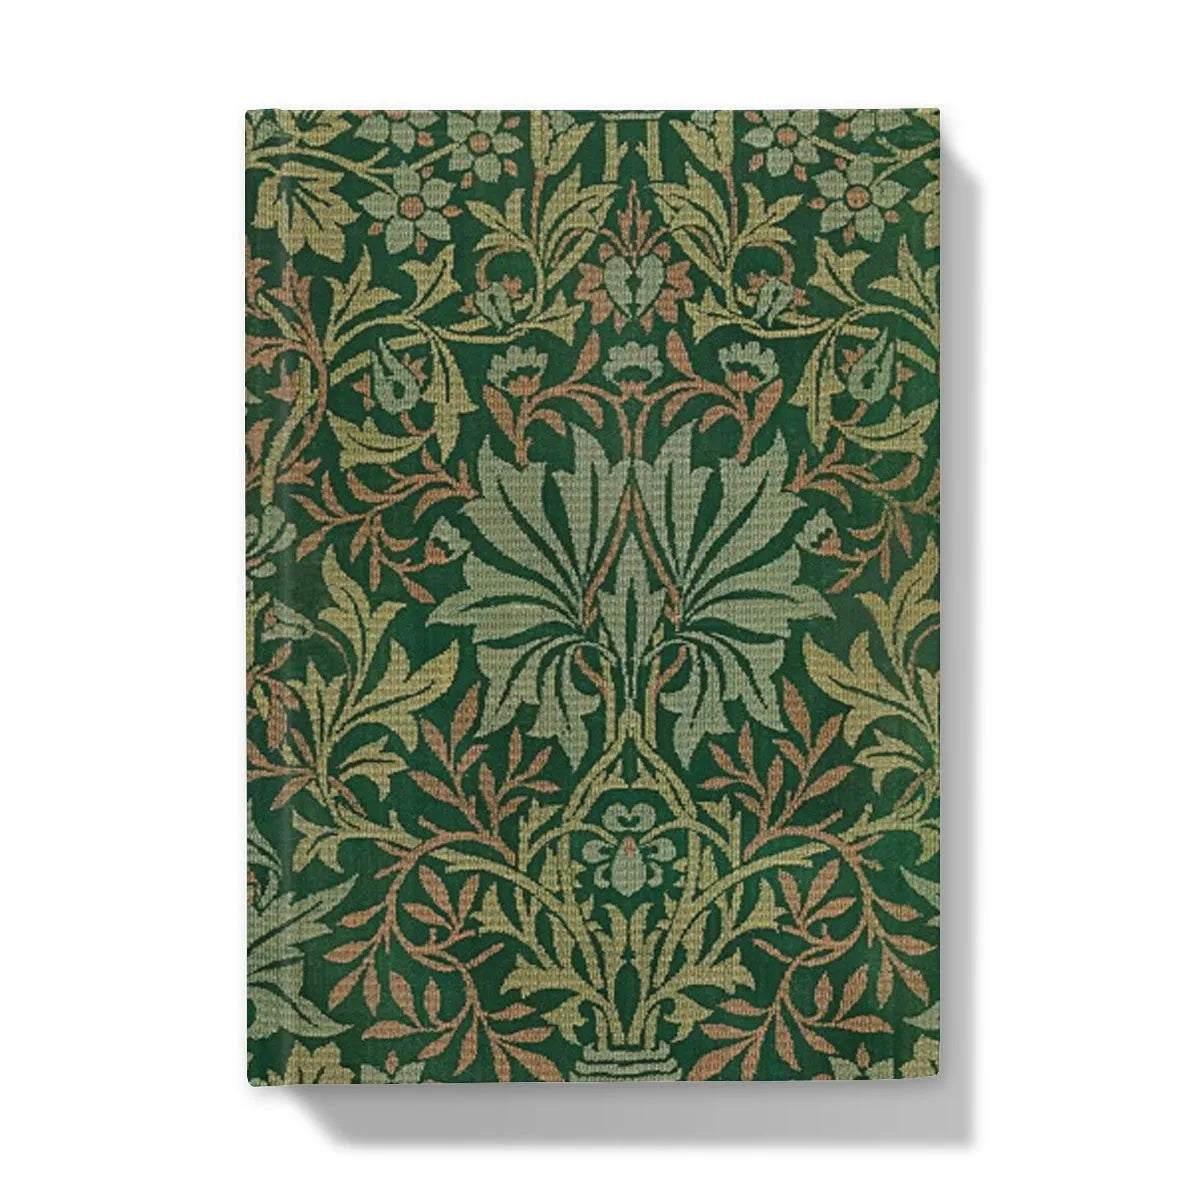 Flower Garden By William Morris Hardback Journal - 5’x7’ / 5’ x 7’ - Lined Paper - Notebooks & Notepads - Aesthetic Art